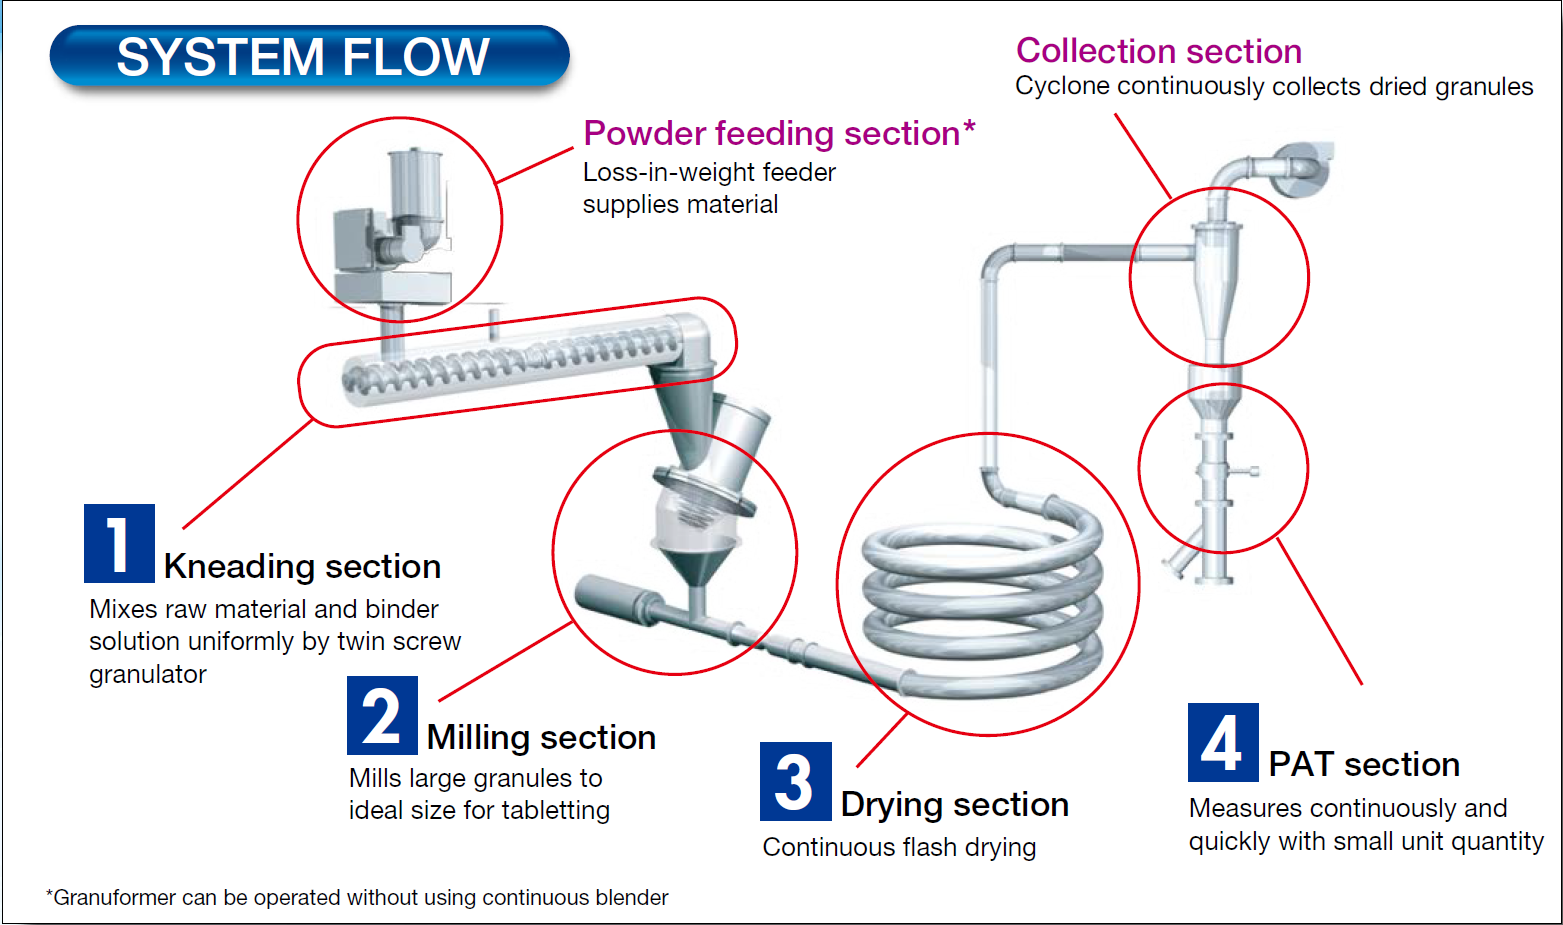 System flow diagram